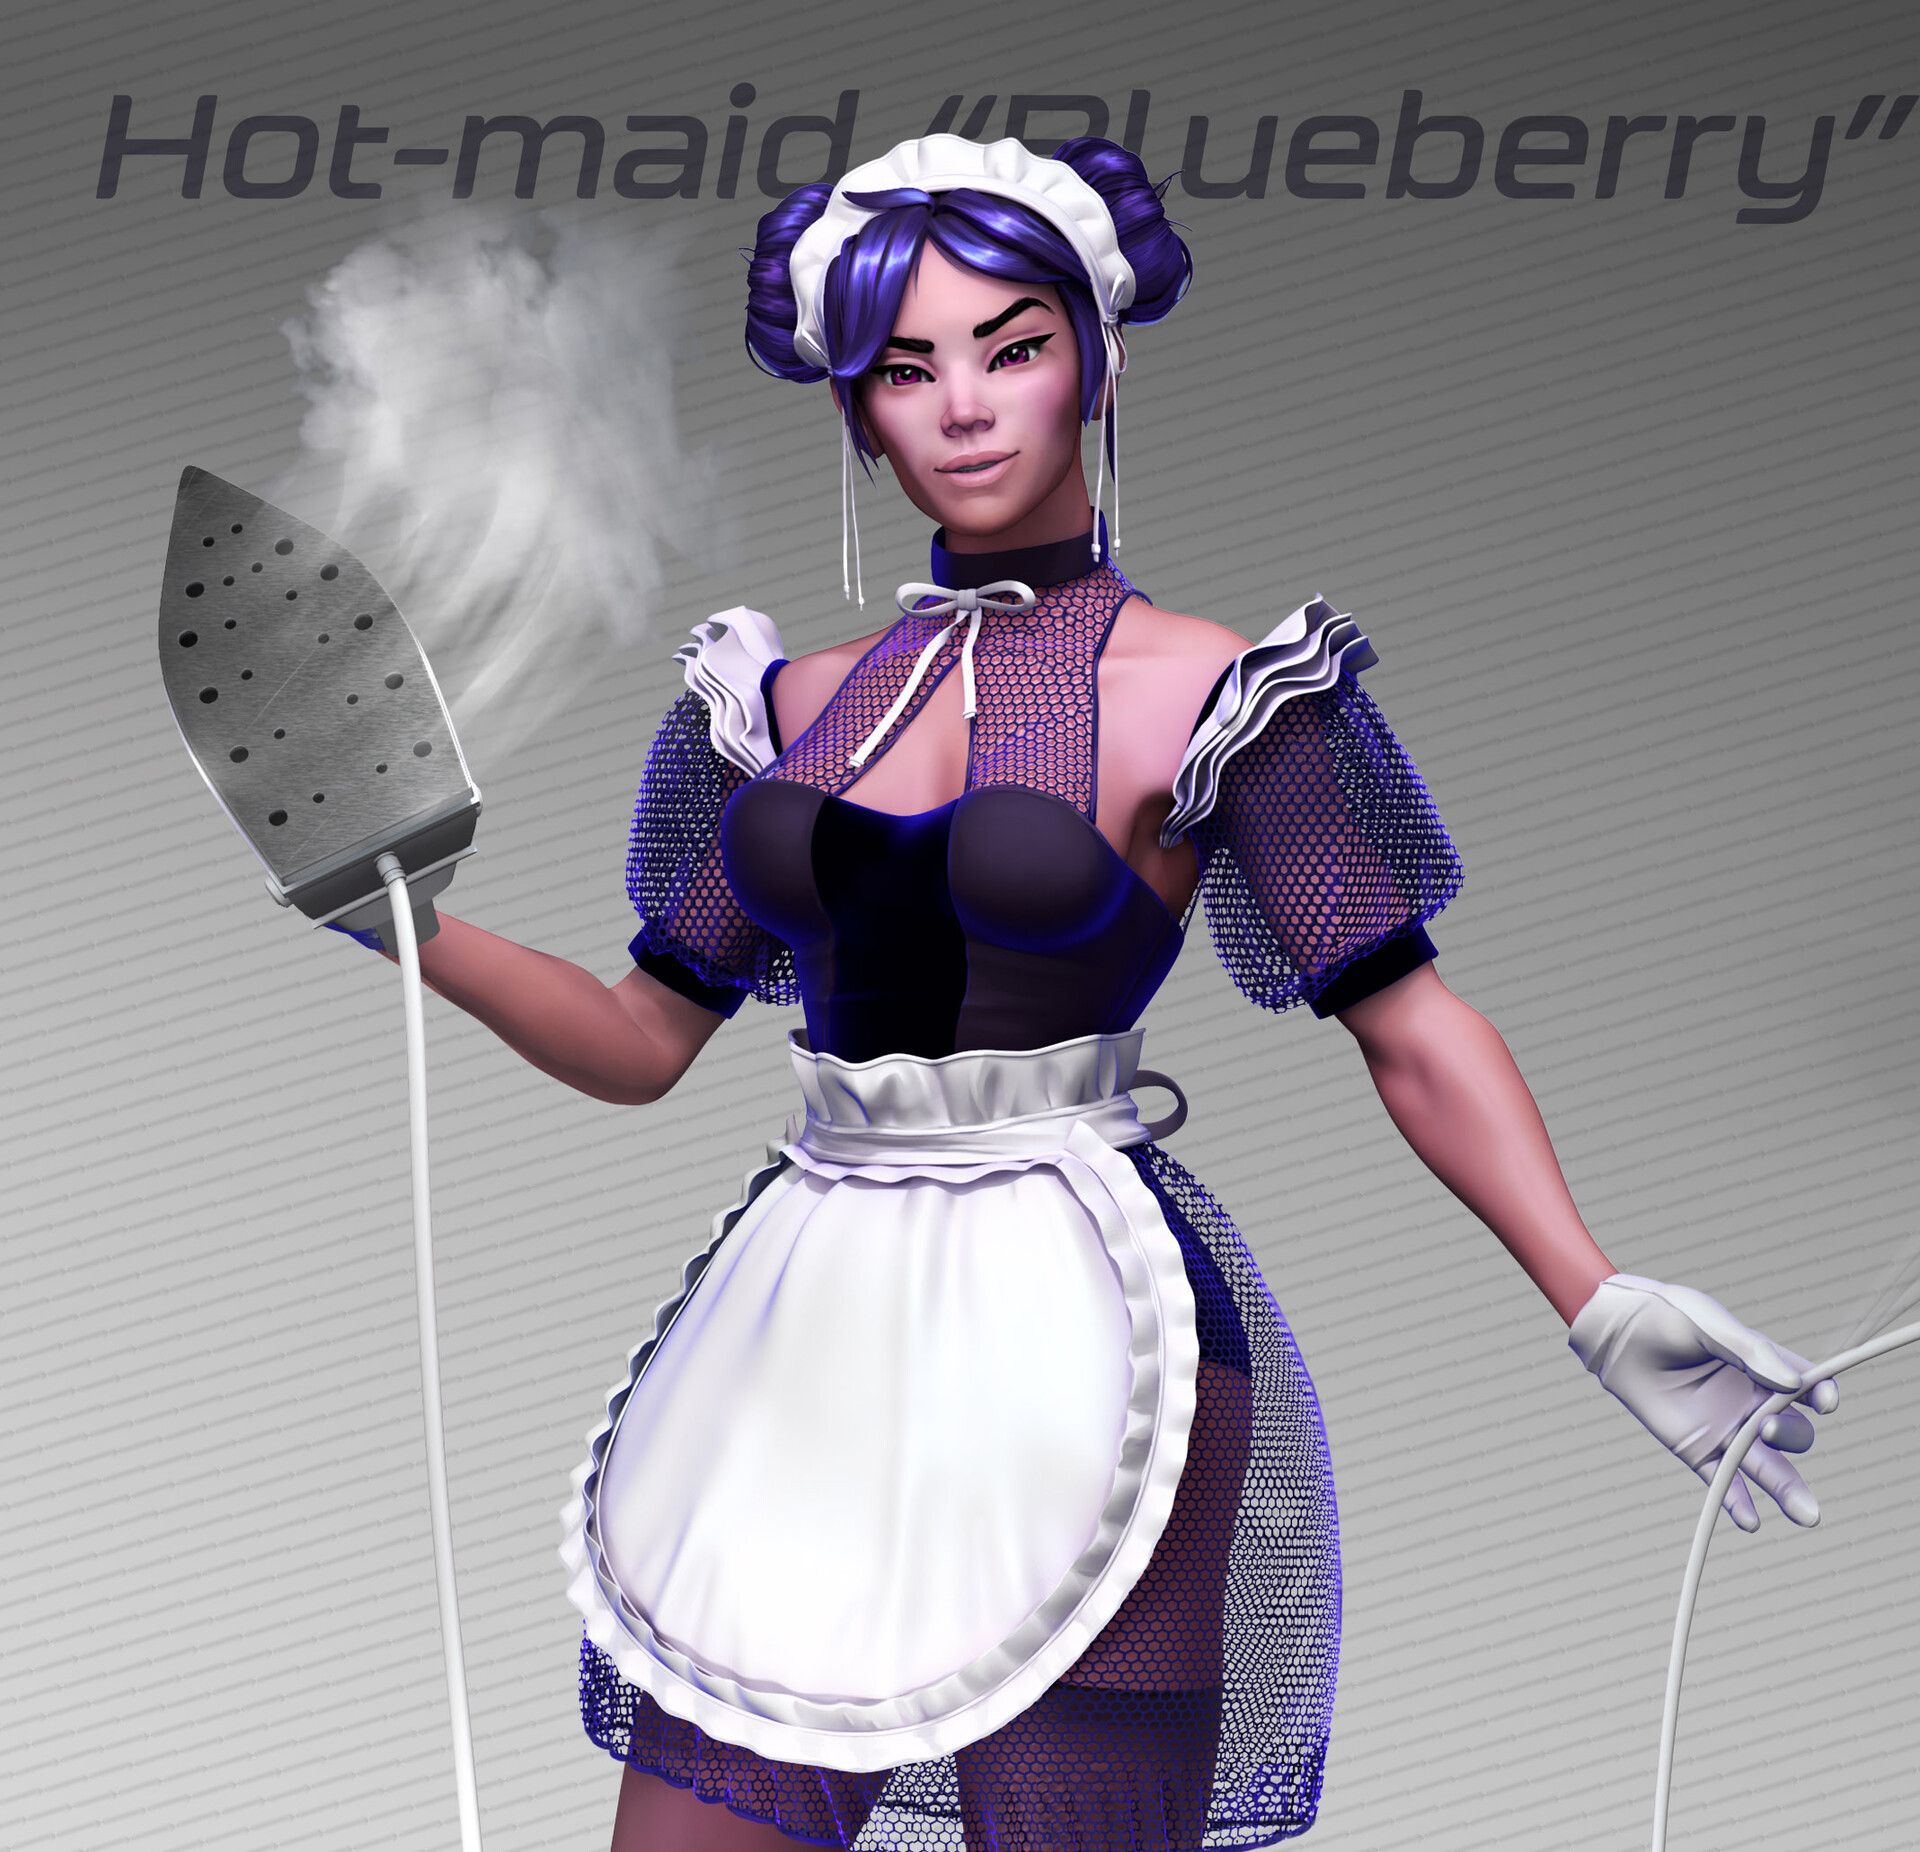 Artstation Hot Maid “blueberry”